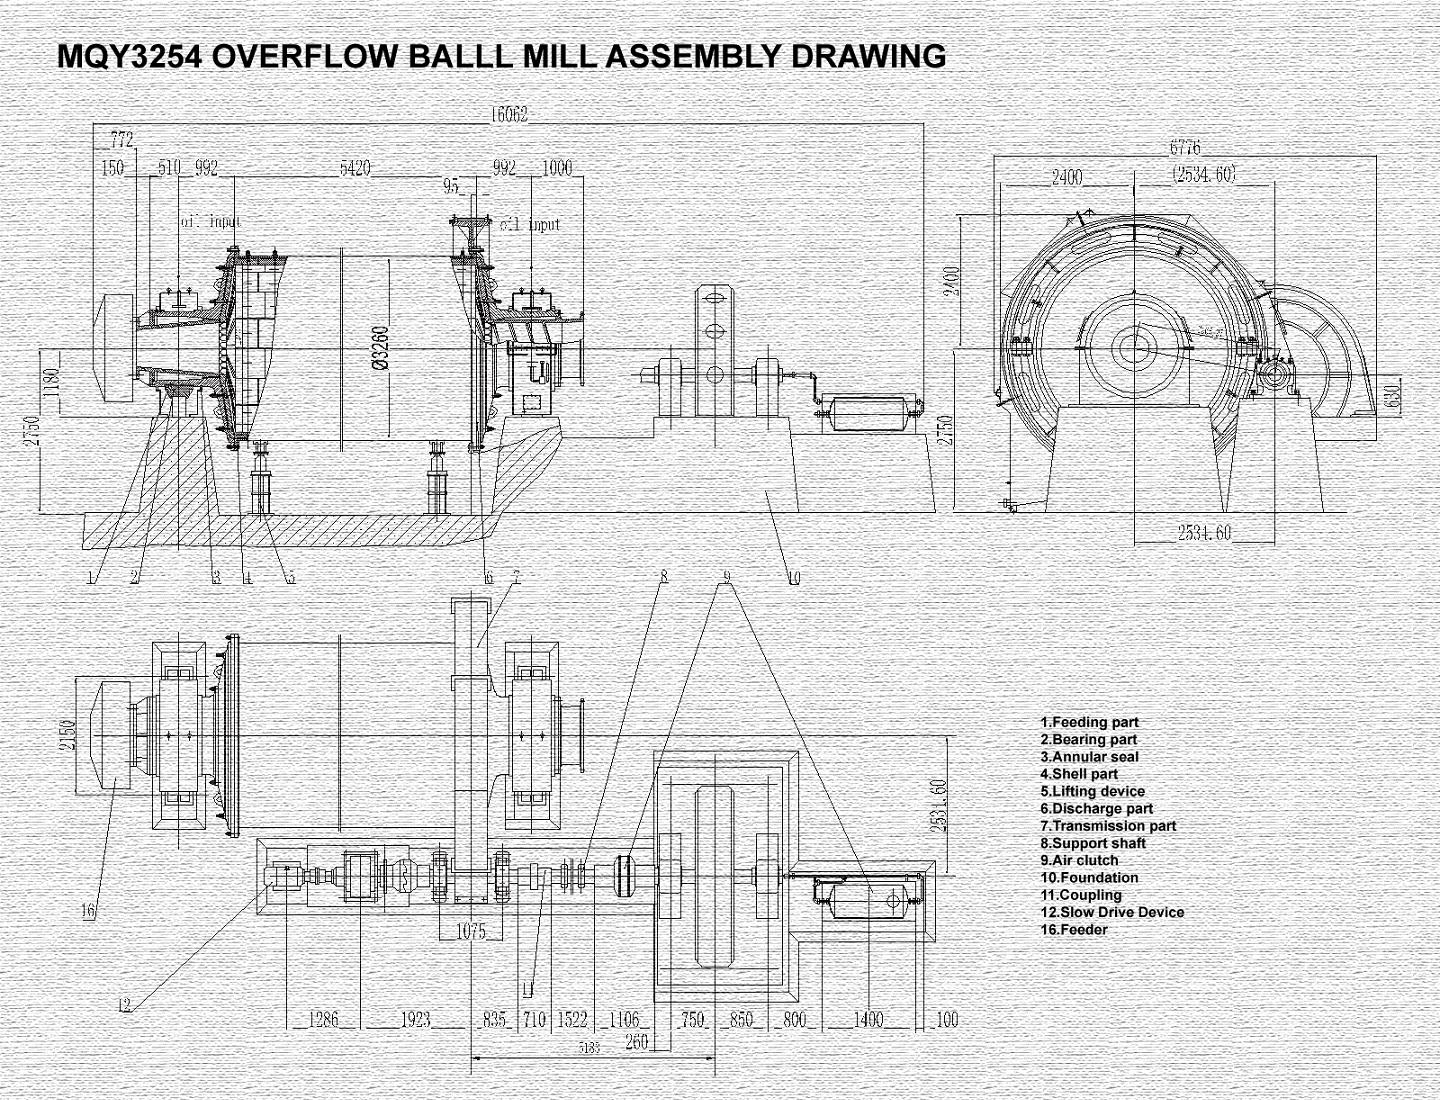 Overflow ball mill